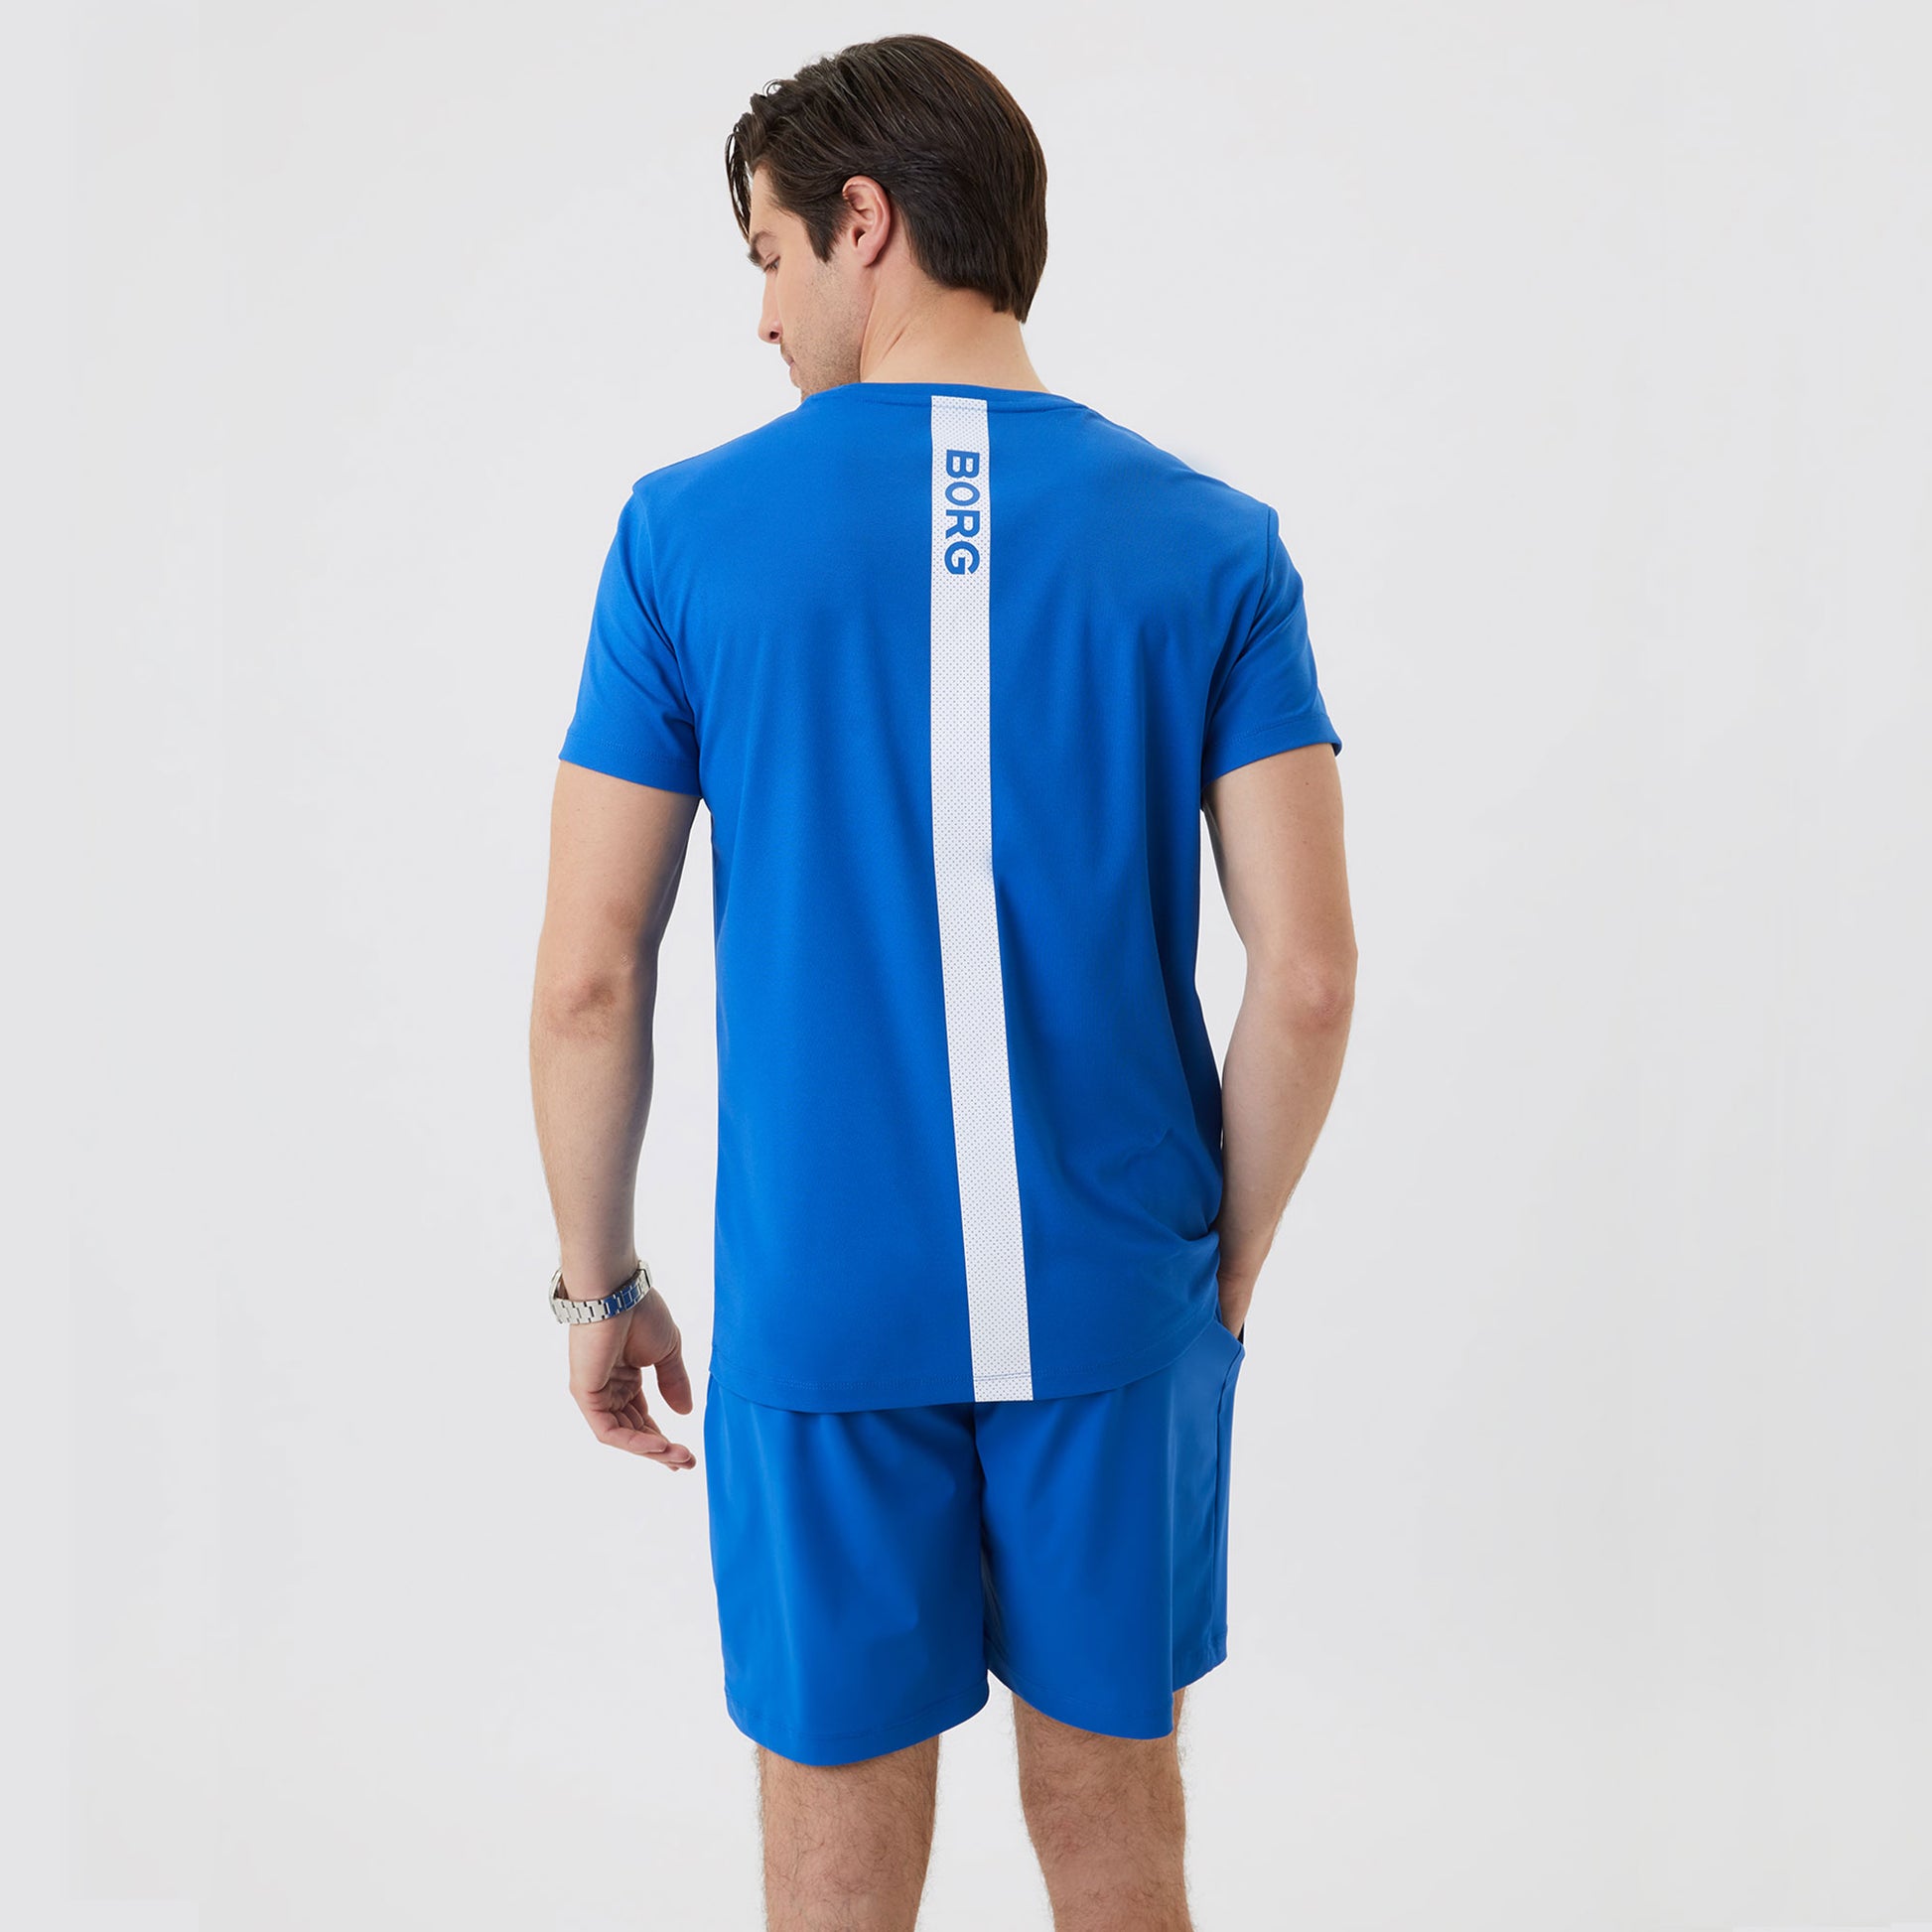 Björn Borg Ace Men's Tennis Shirt Blue (2)